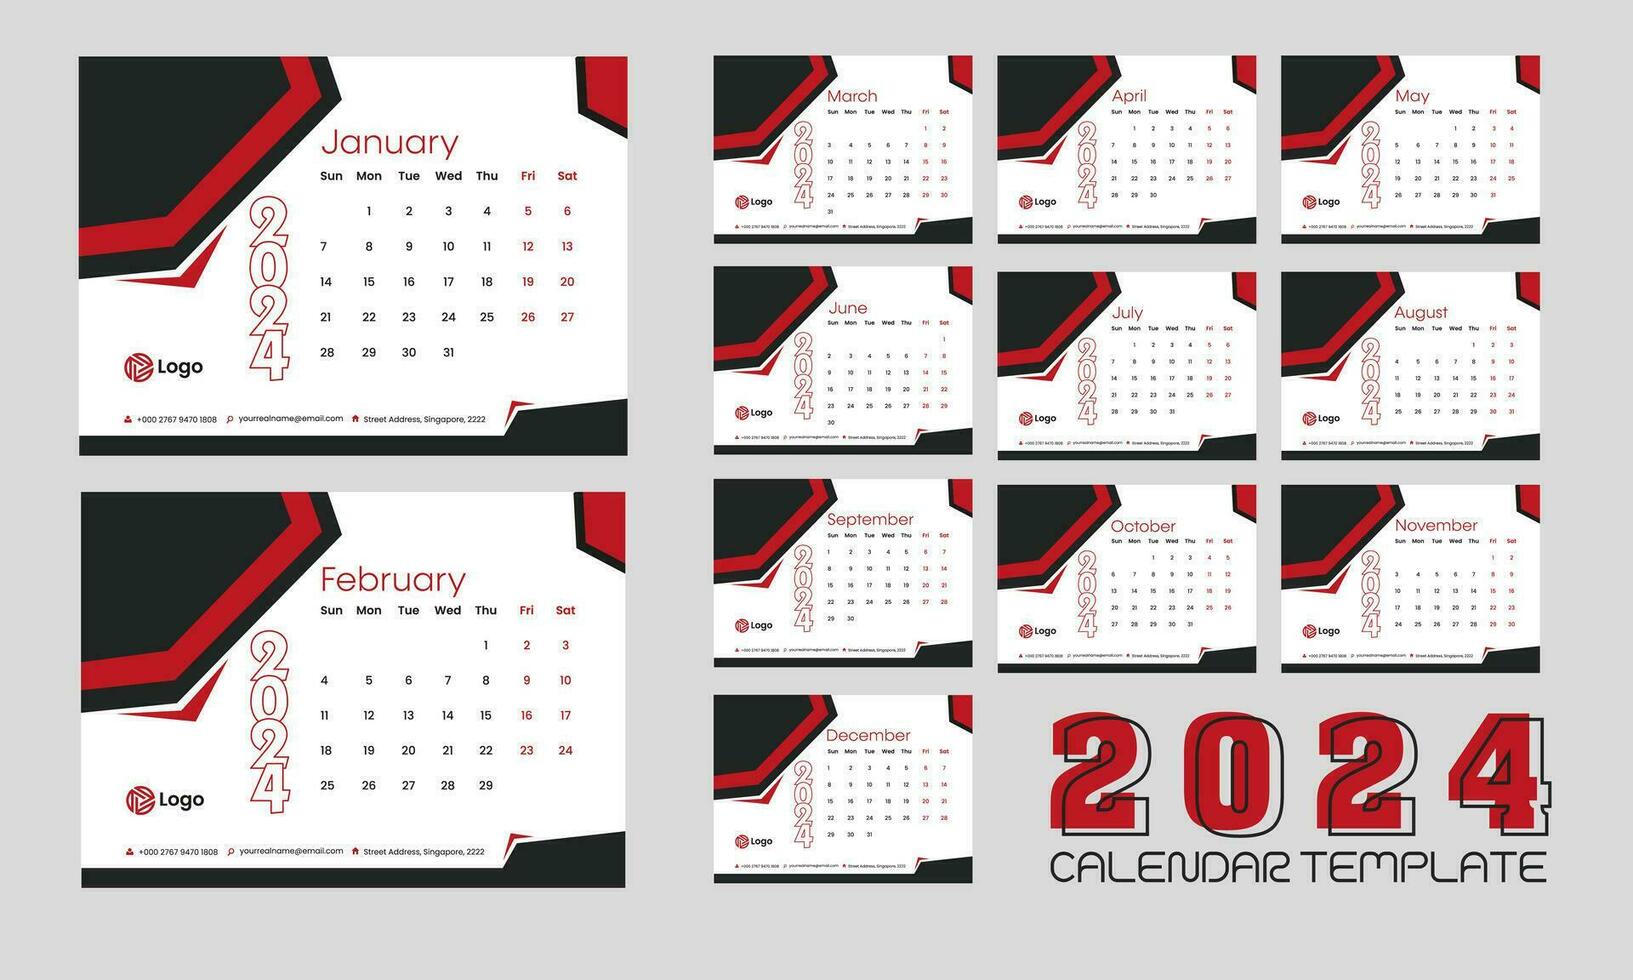 2024 kalender design med bakgrund vektor